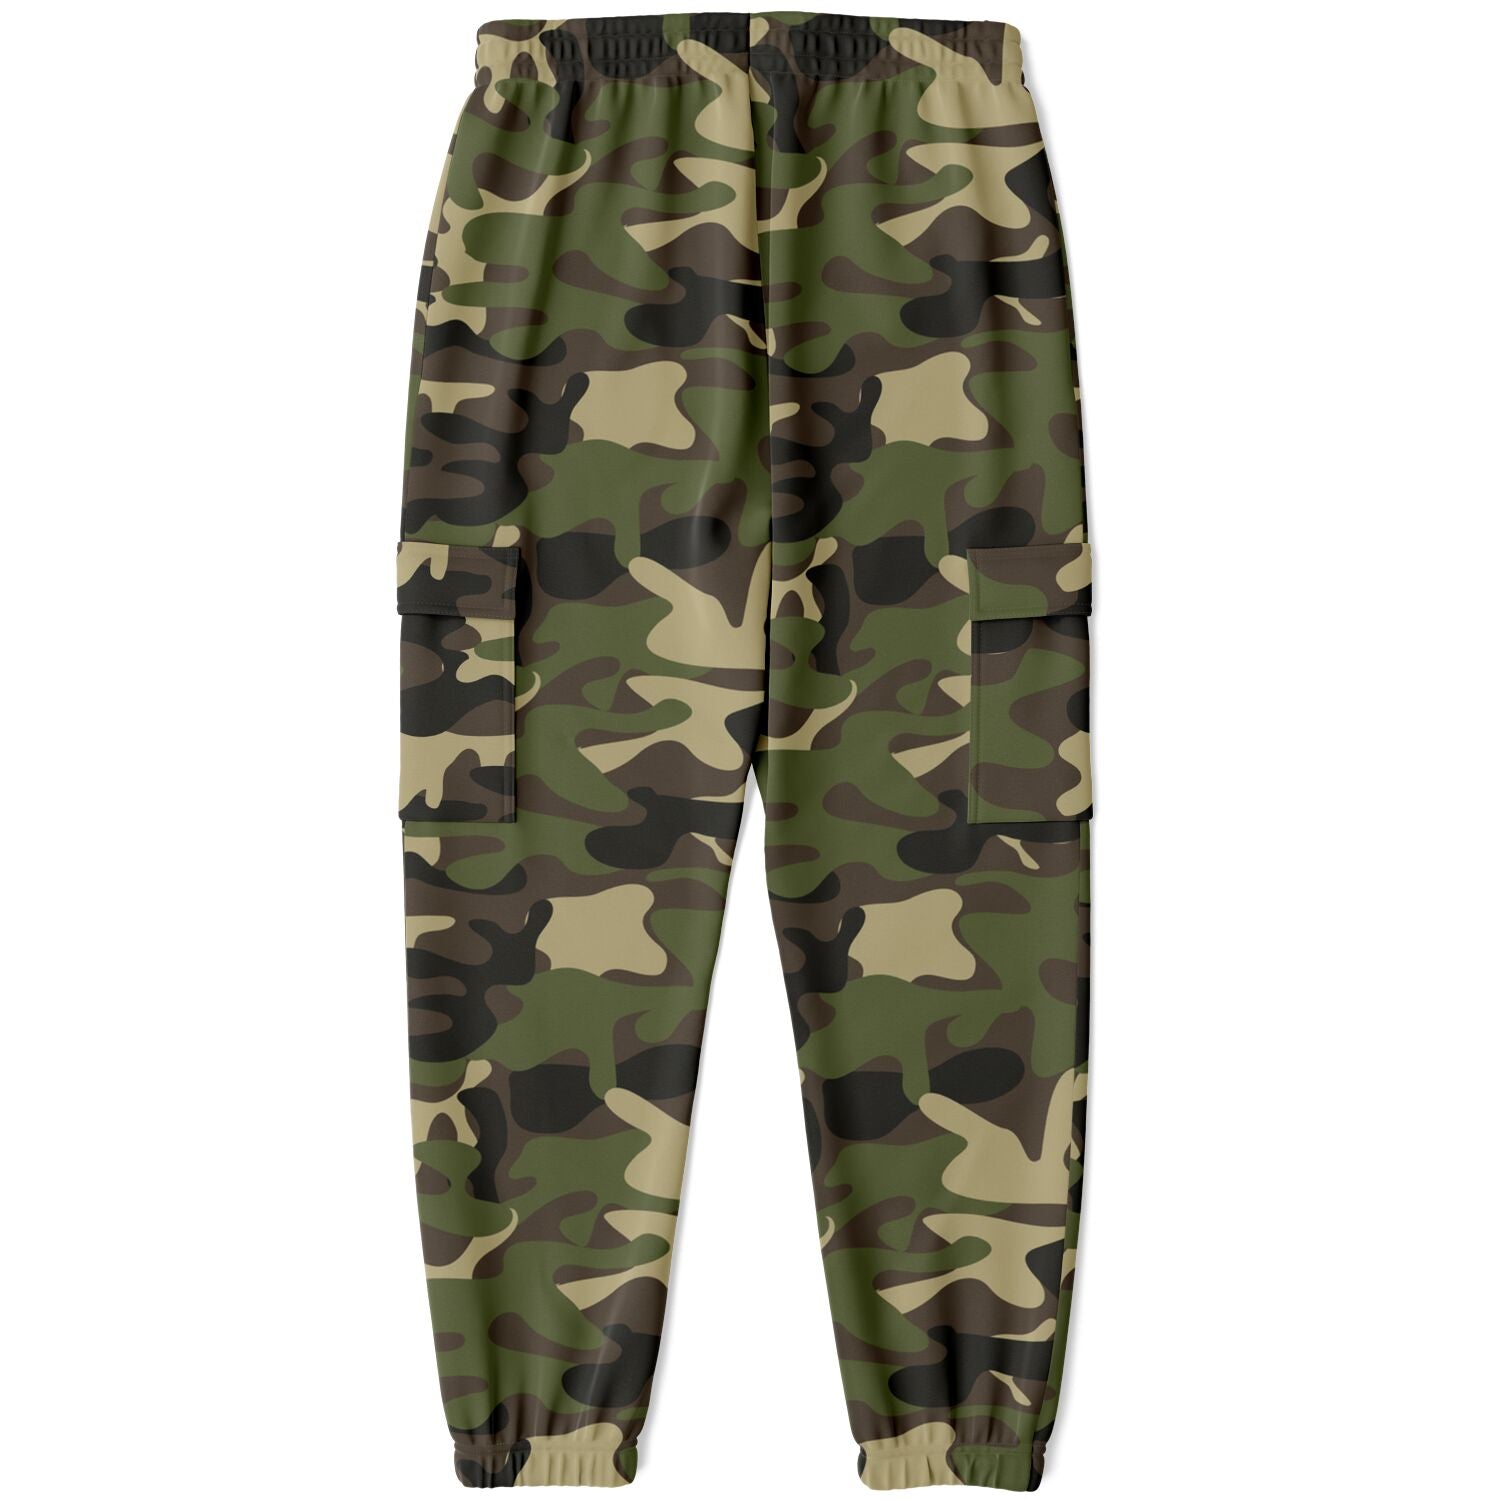 Camouflage Cargo Pants with Flap Pockets, Green Army Camo Women Men Fleece Joggers Sweatpants Fun Comfy Cotton Sweats Streetwear Starcove Fashion